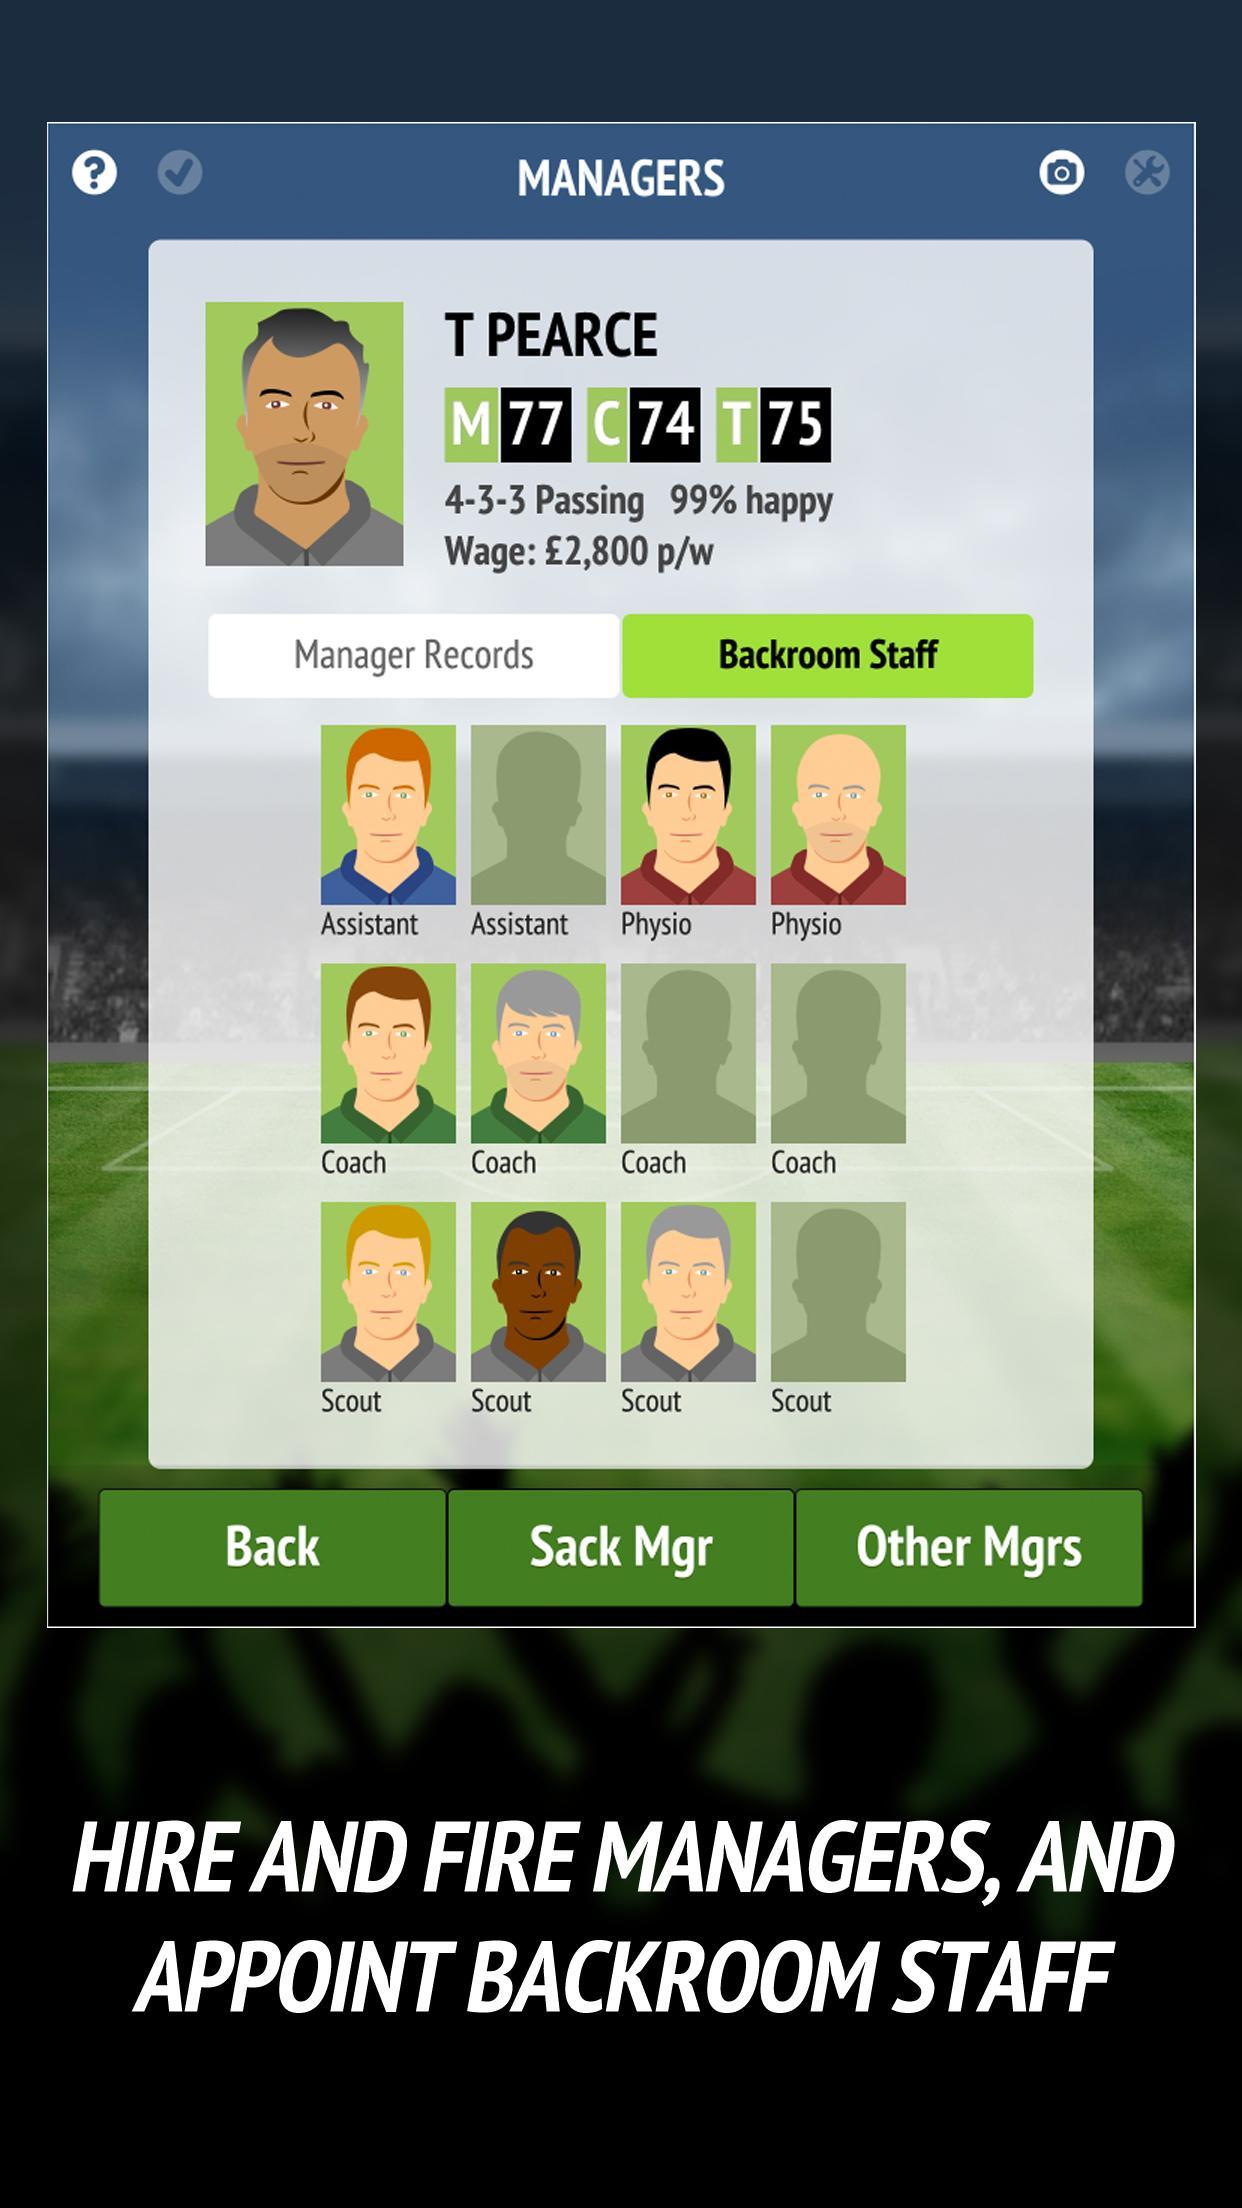 Football Chairman Pro (Soccer) screenshot game